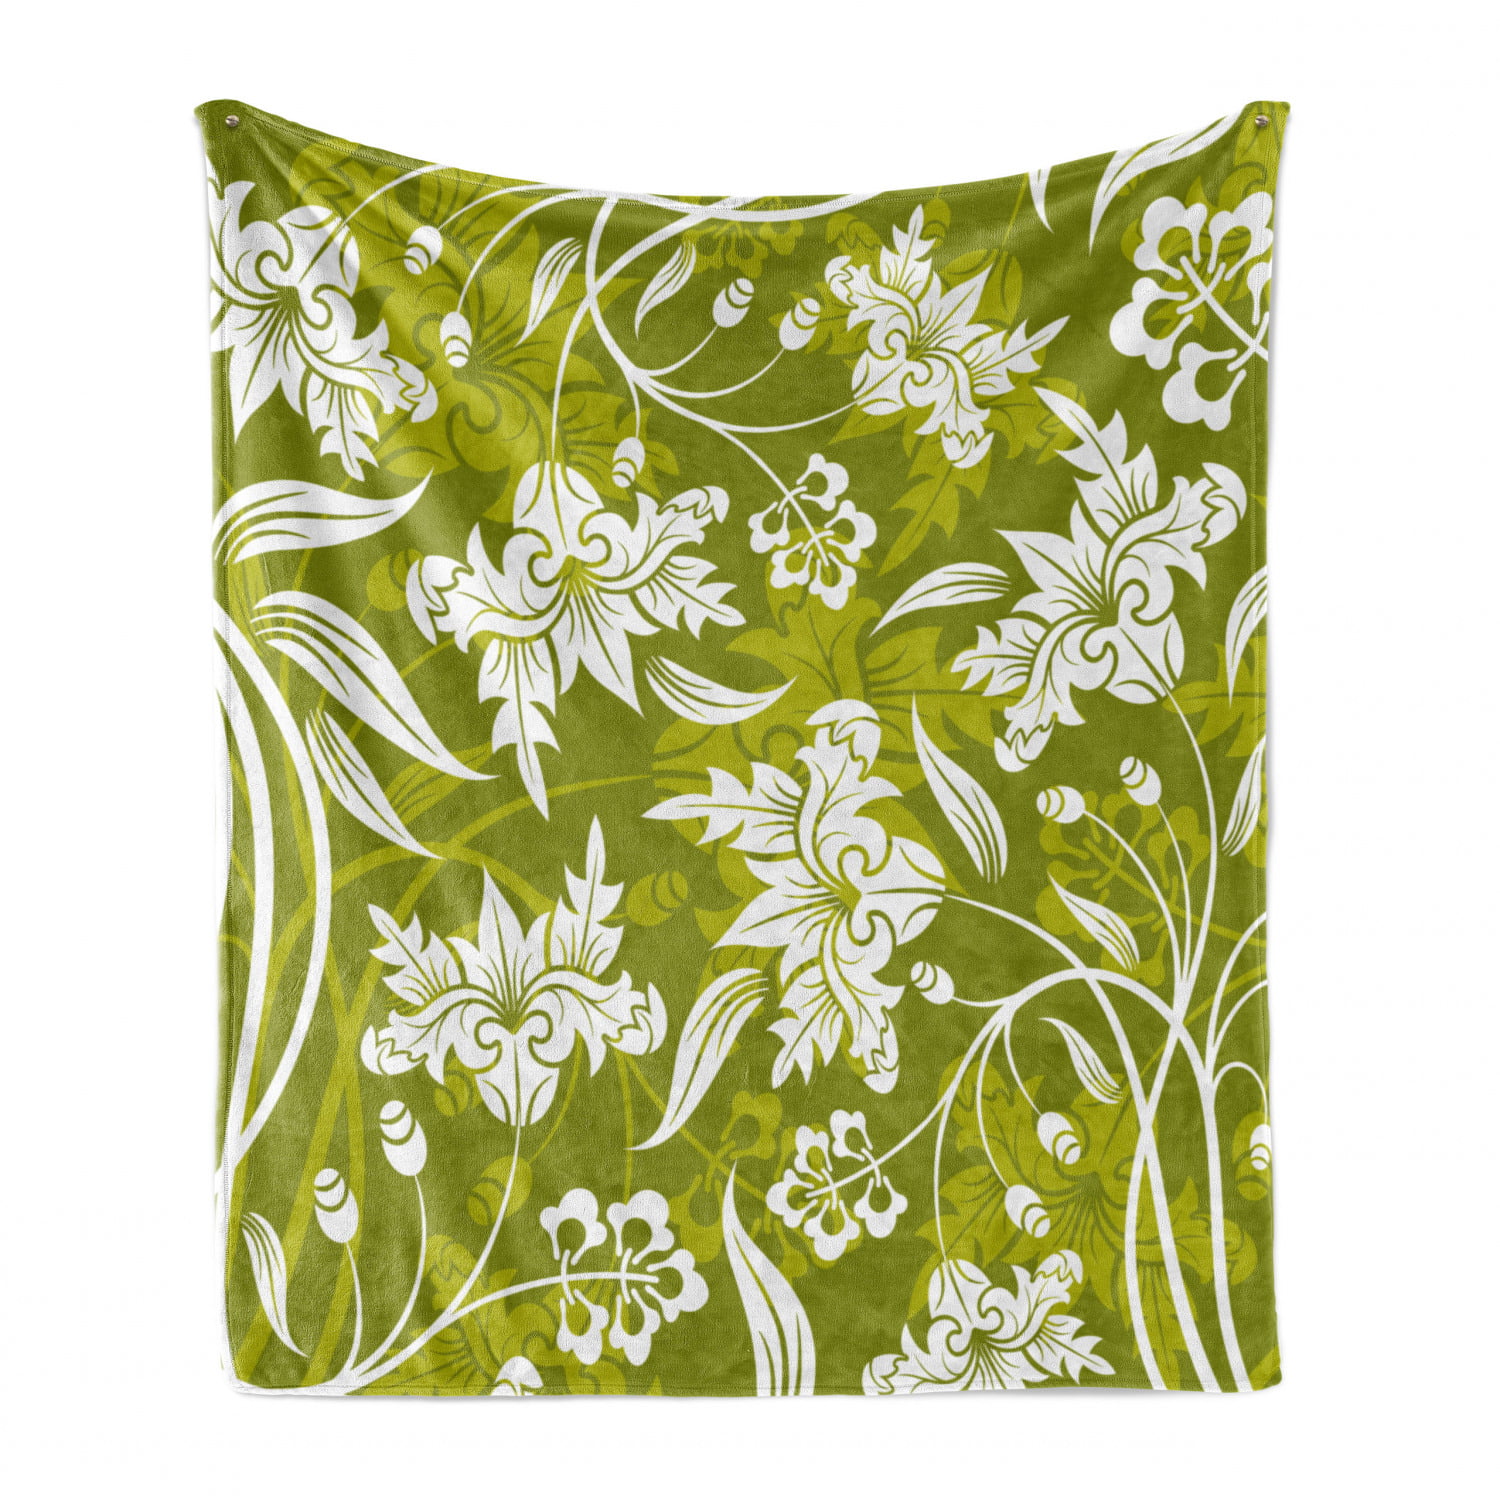 Throw Blanket for Couch Bed Chair Soft Flannel Fleece Blanket 50X60 Flower Pattern Decorative Warm Cozy Lightweight